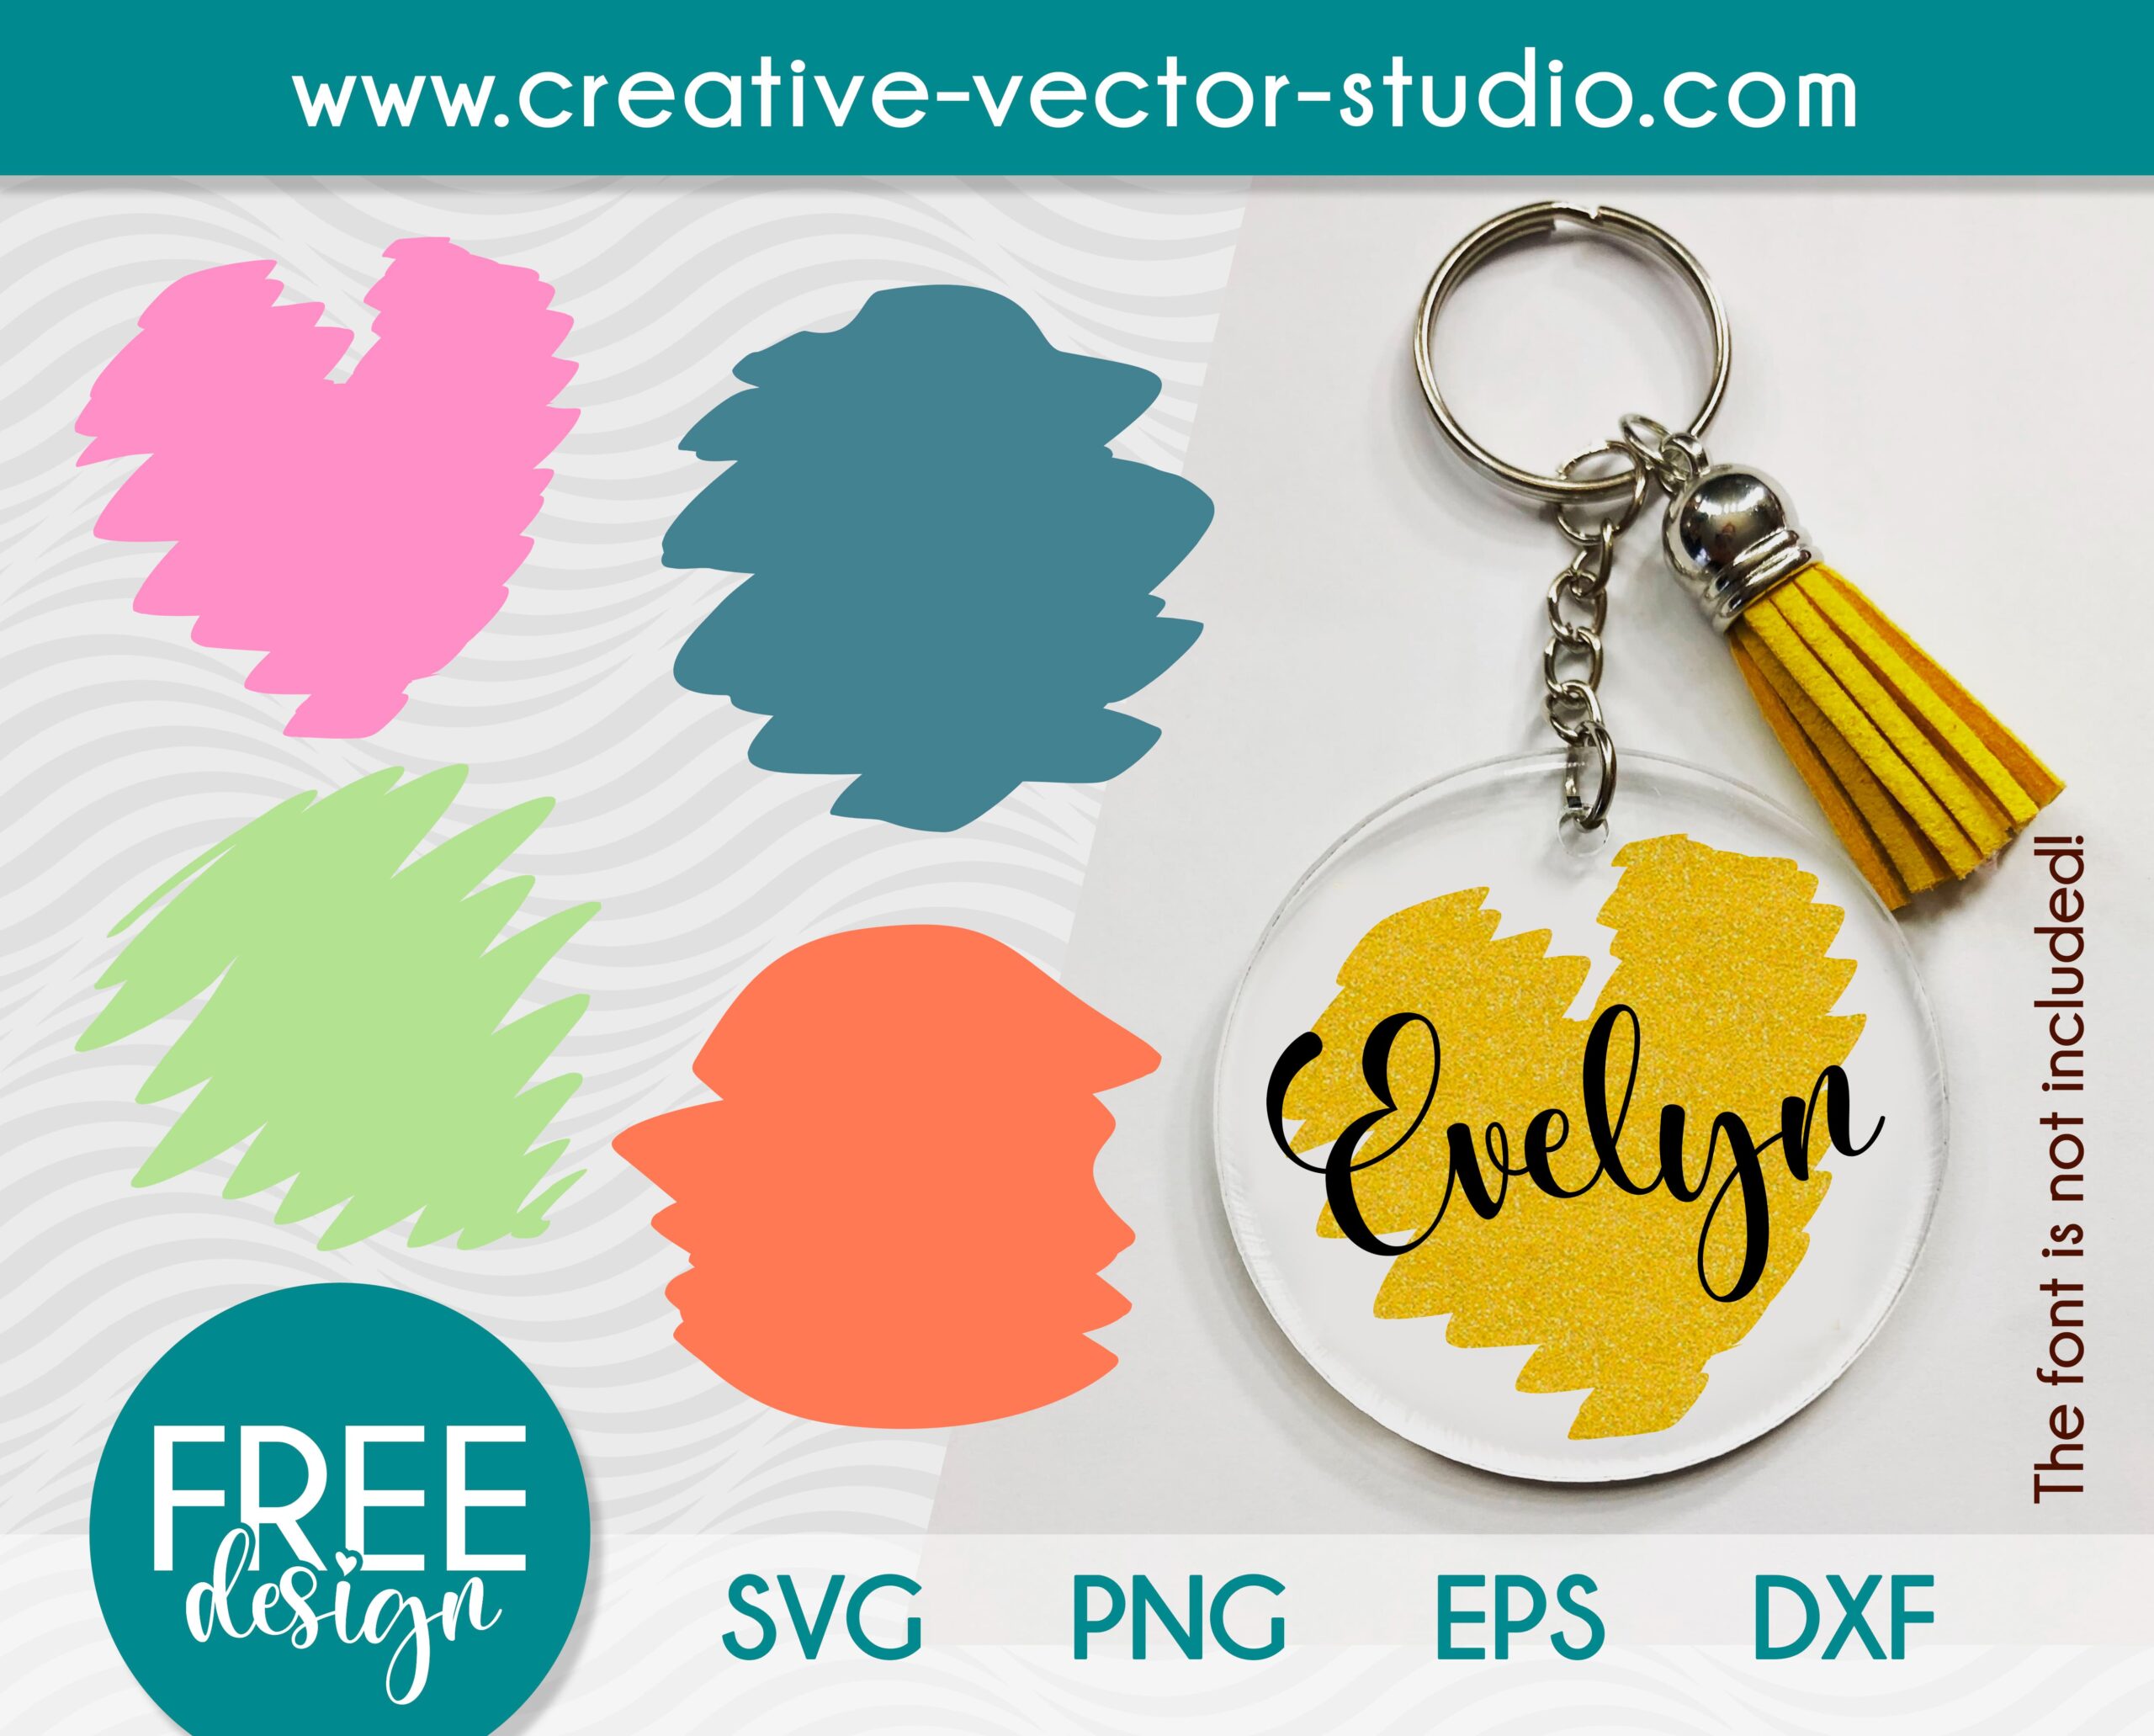 Free Brush Stroke SVG Keychain Pattern | Creative Vector Studio